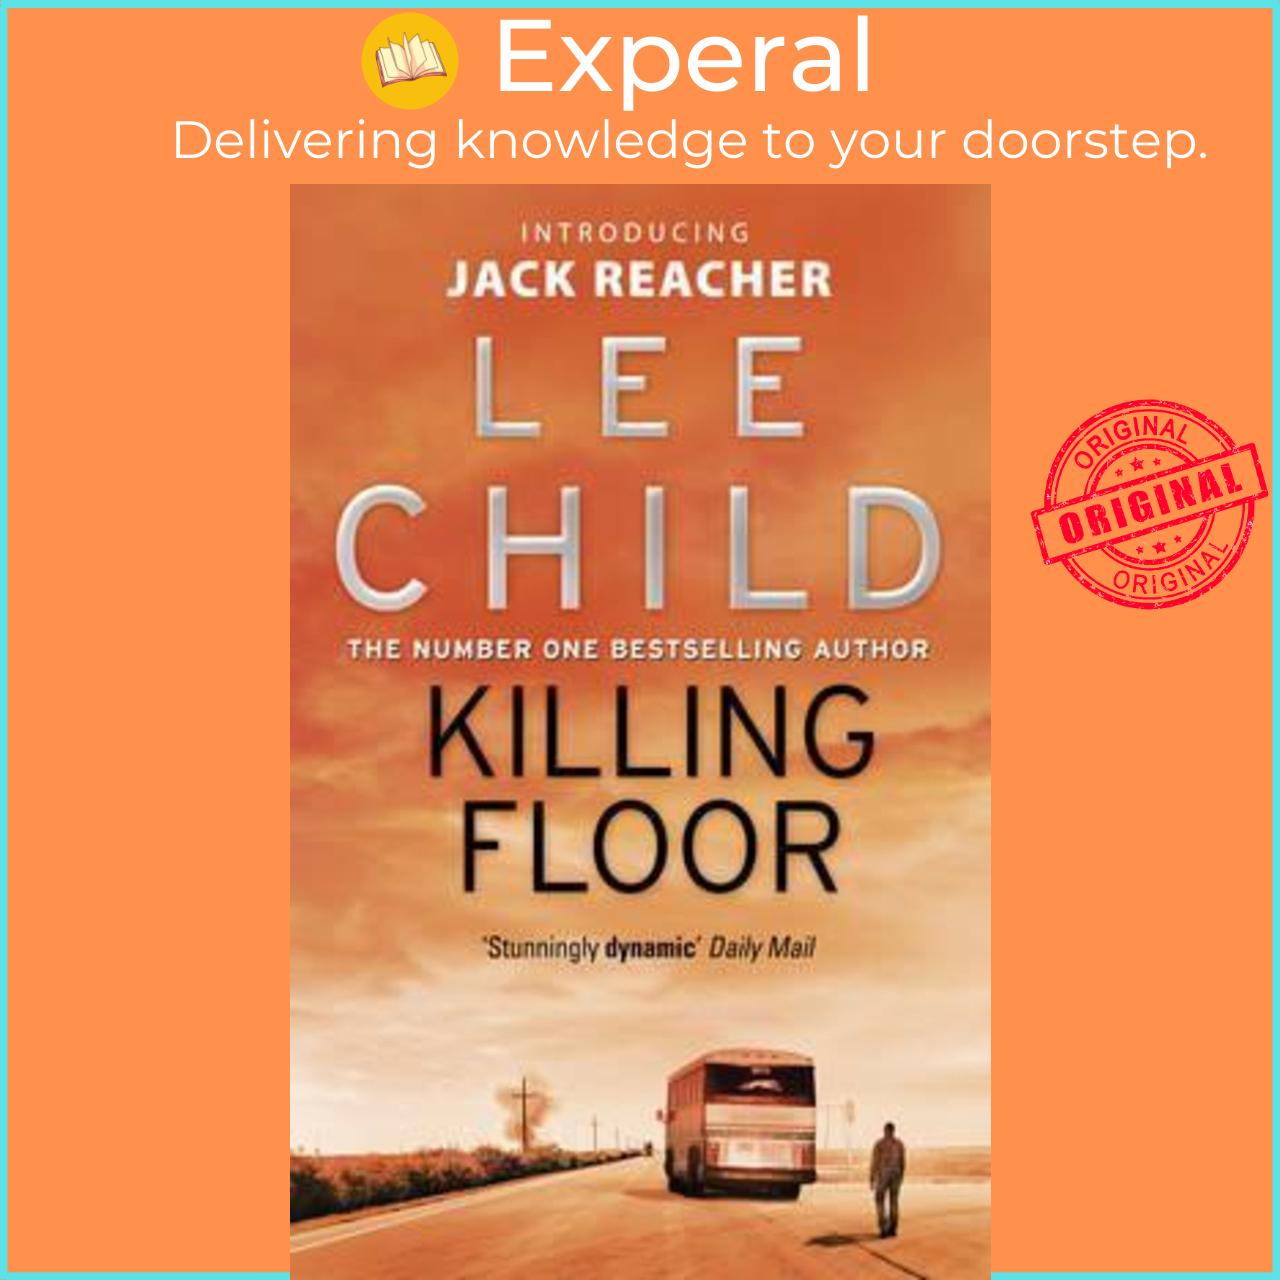 Hình ảnh Sách - Killing Floor : (Jack Reacher 1) by Lee Child (UK edition, paperback)